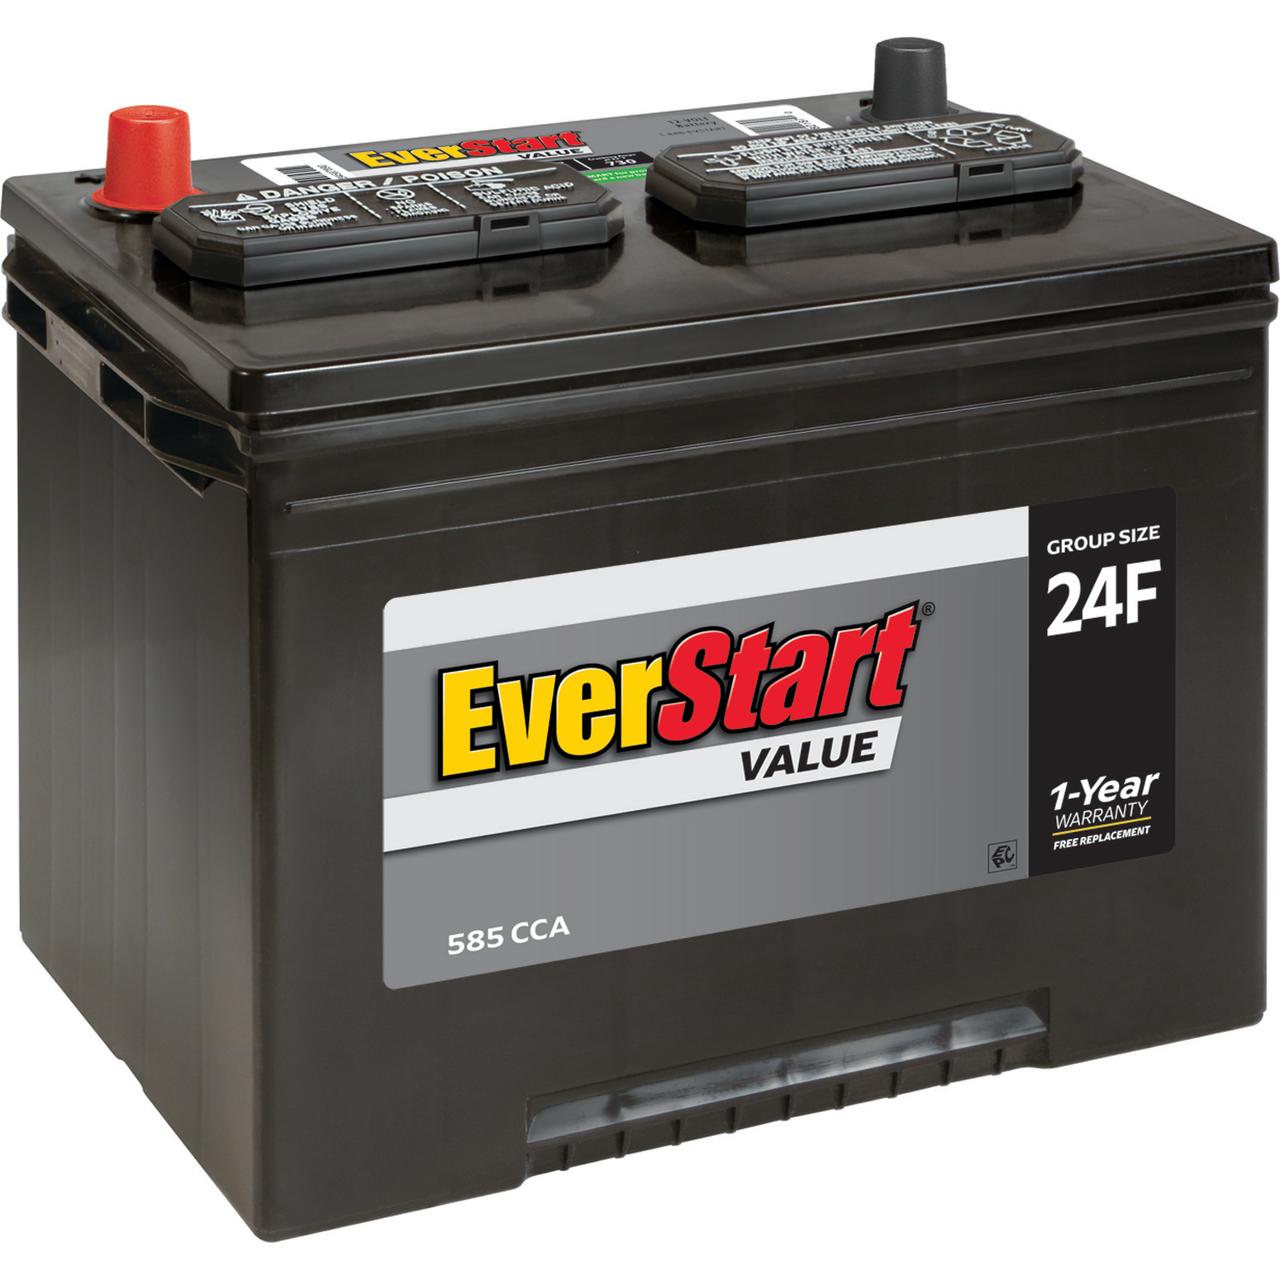 EverStart Value Lead Acid Automotive Battery, Group Size 24F 12 Volt, 585 CCA - image 1 of 7